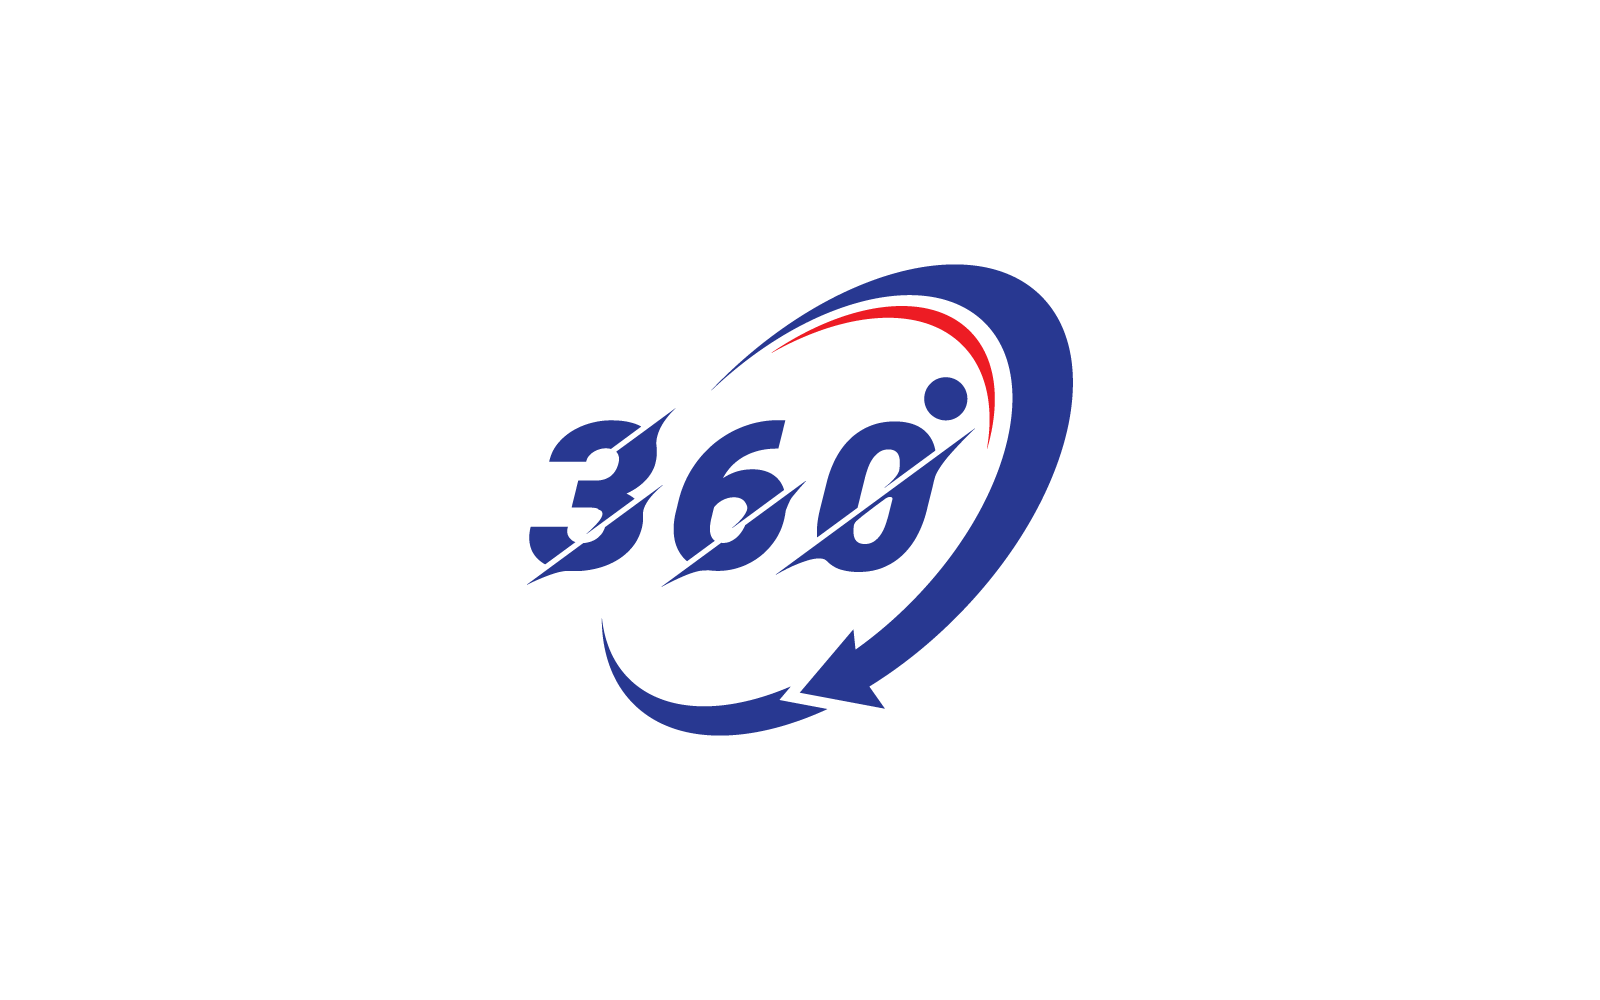 360 view logo vector flat design template